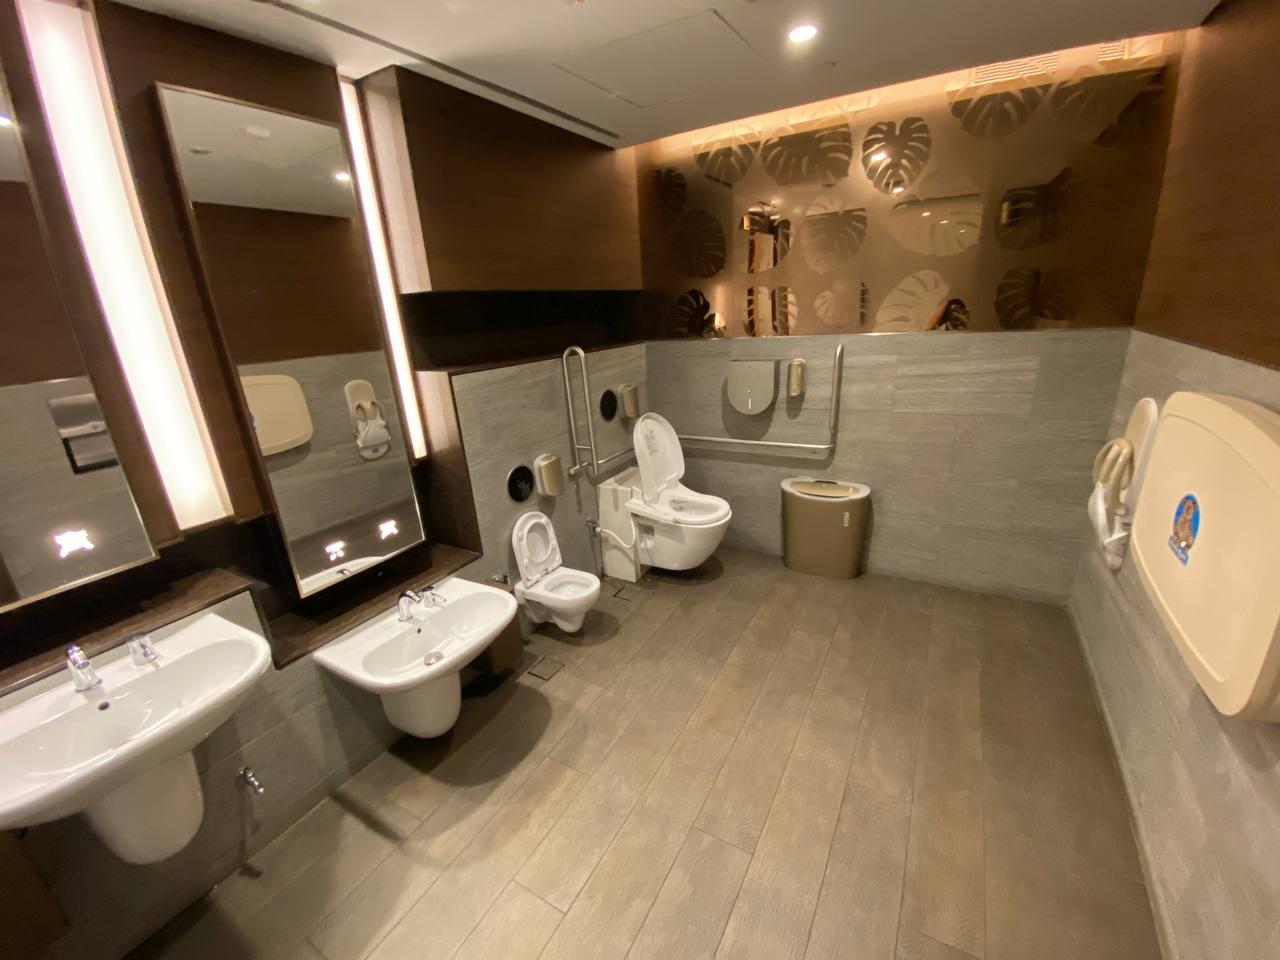 Picture of handicap toilet